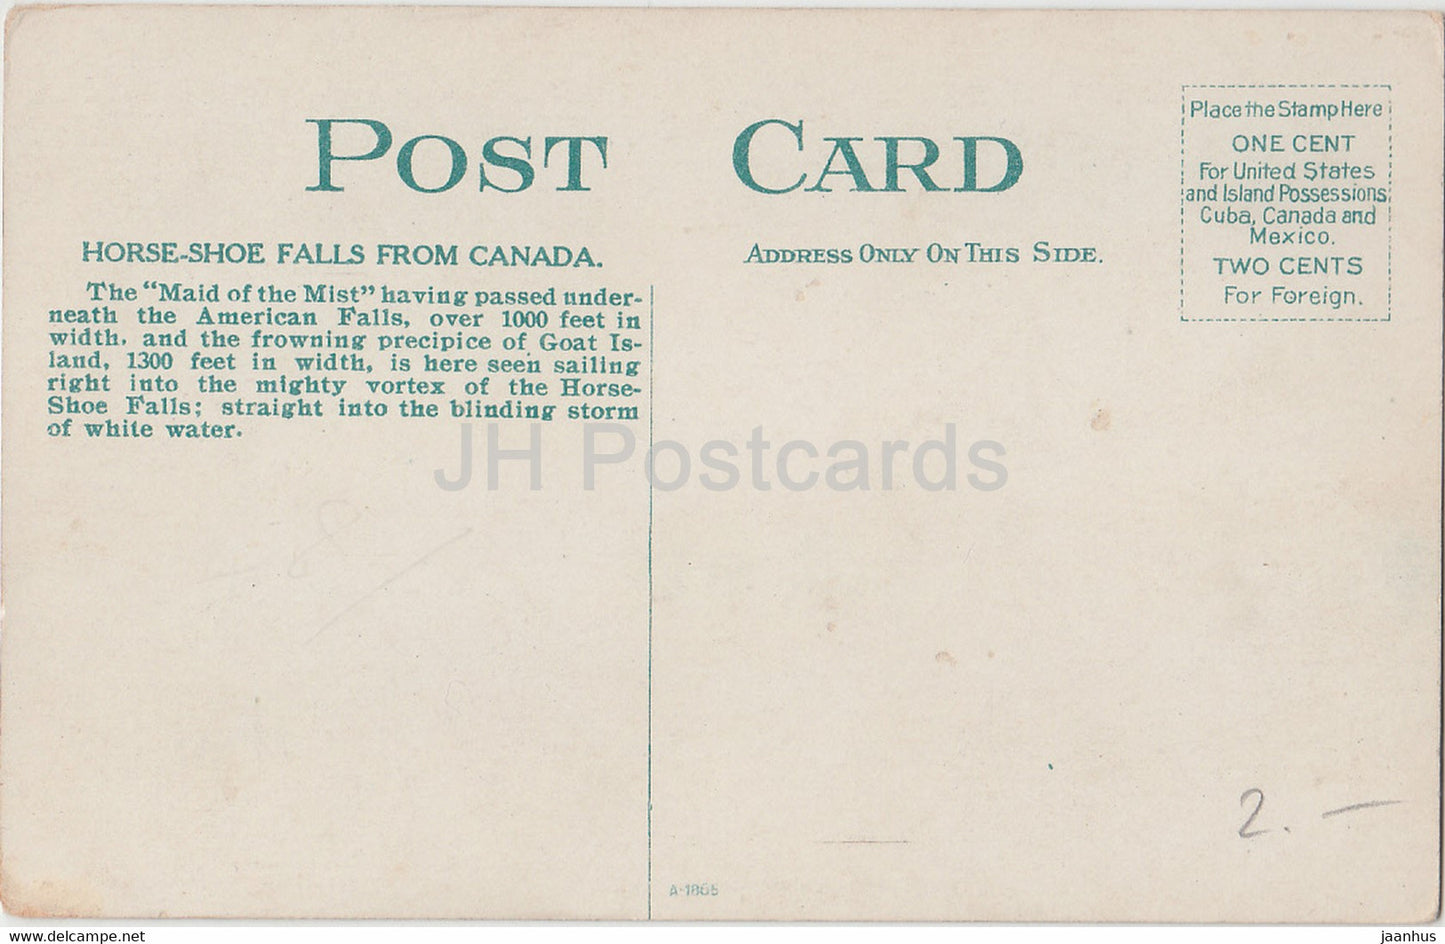 Horseshoe Falls aus Kanada - Niagarafälle - Dampfer - Boot - alte Postkarte - Kanada - unbenutzt